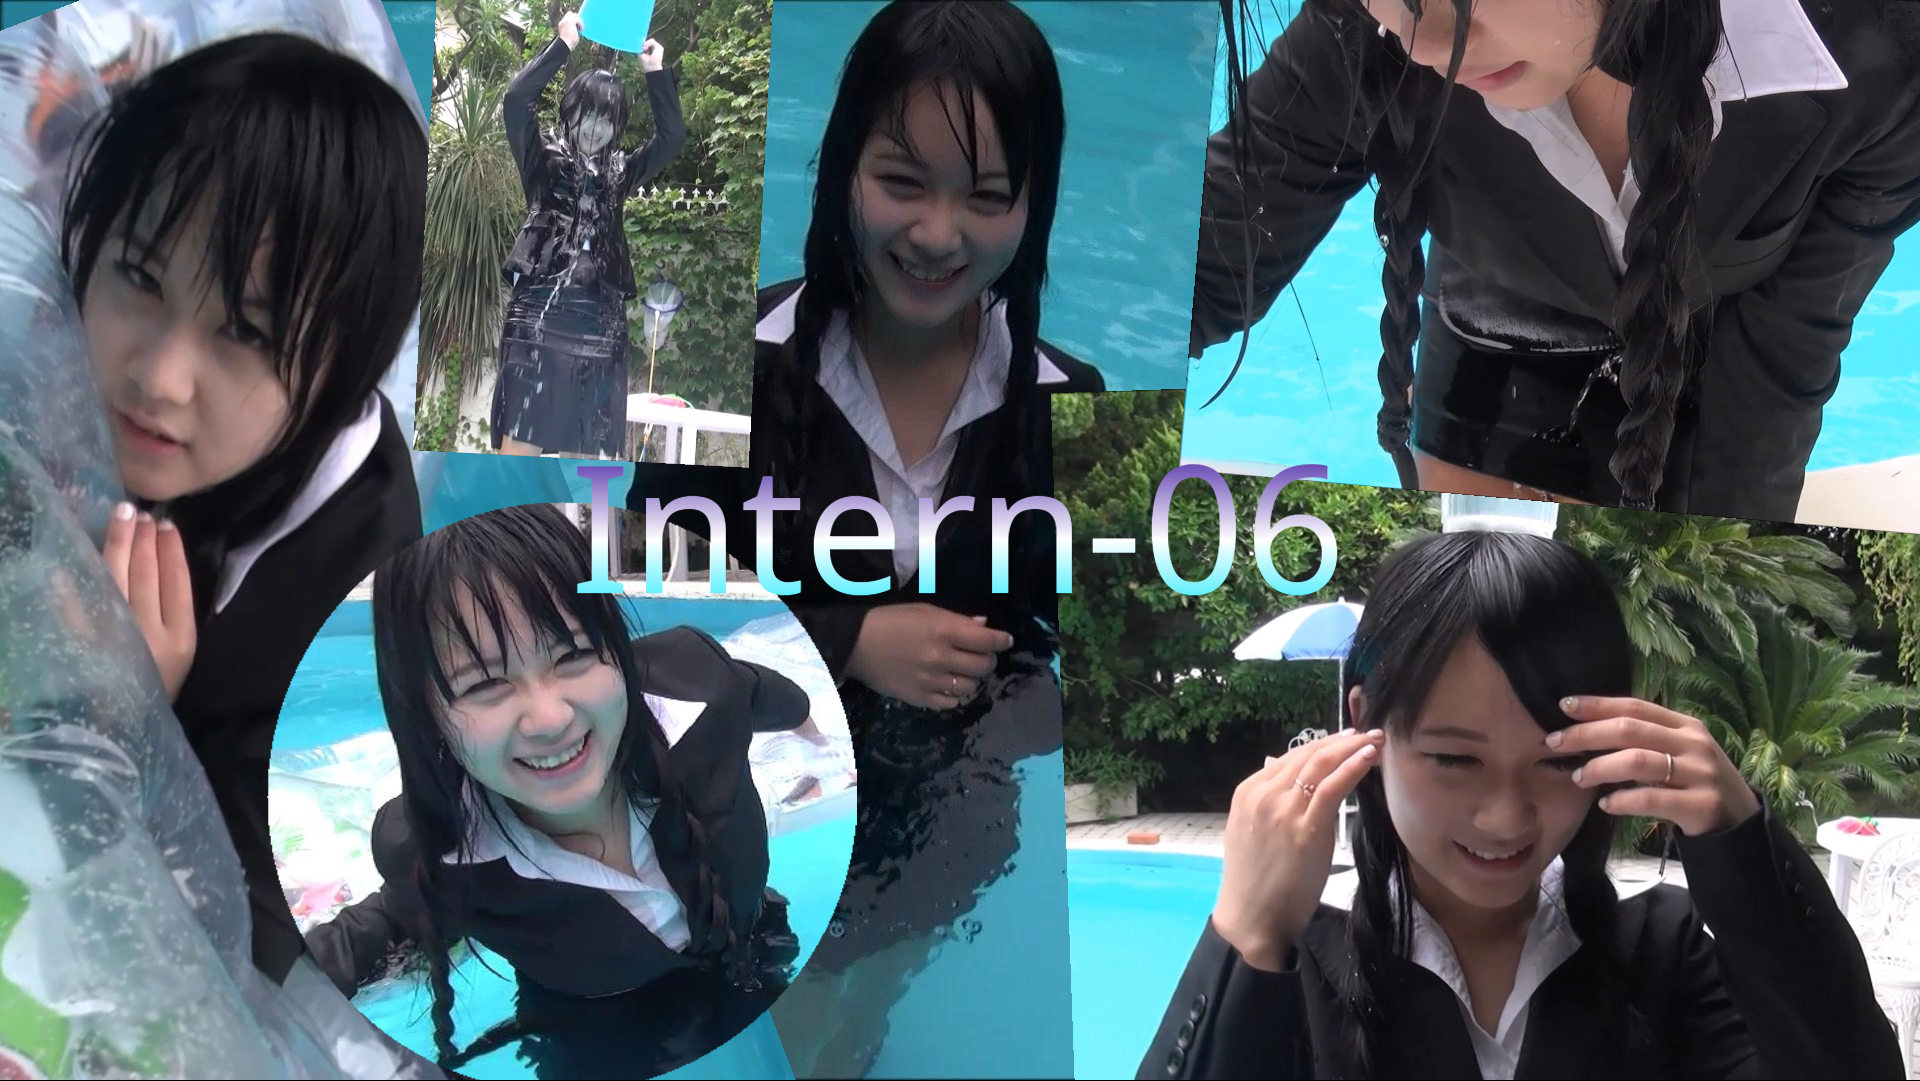 Intern-06